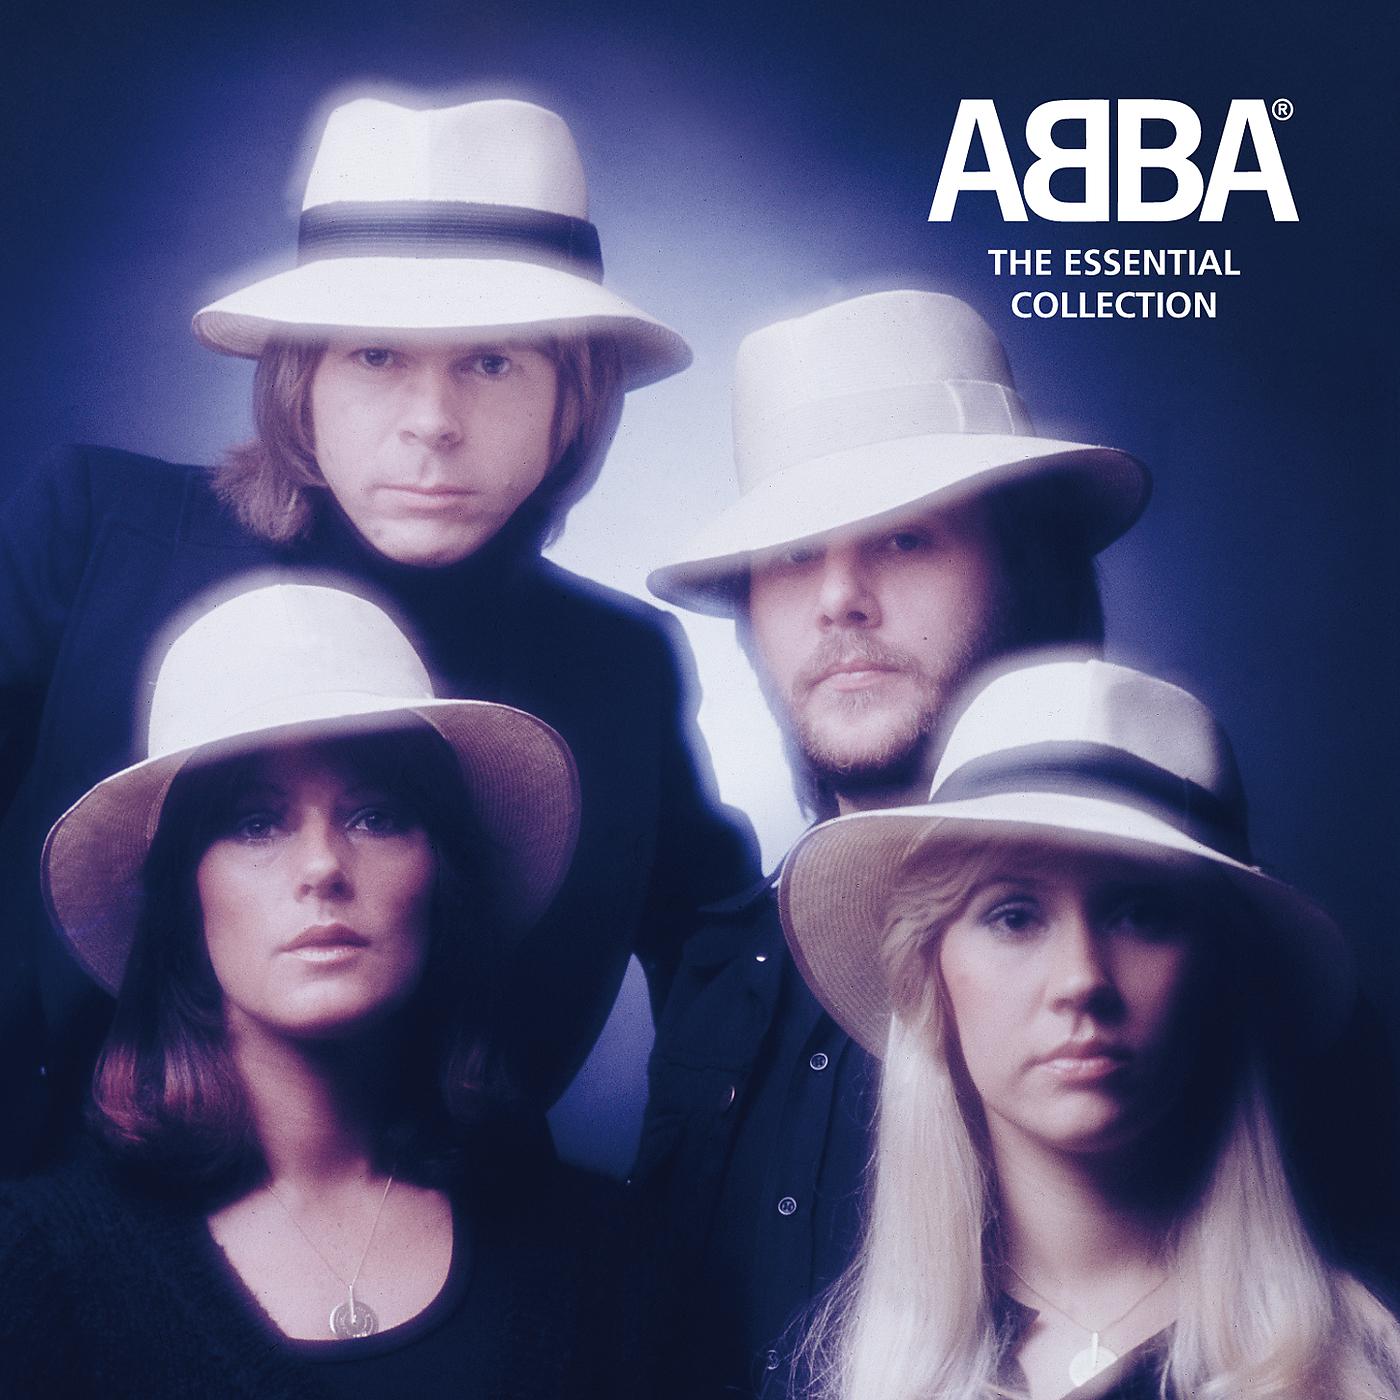 Dancing queen слушать. Абба 2012. The Essential collection ABBA. ABBA обложка. ABBA 1975.